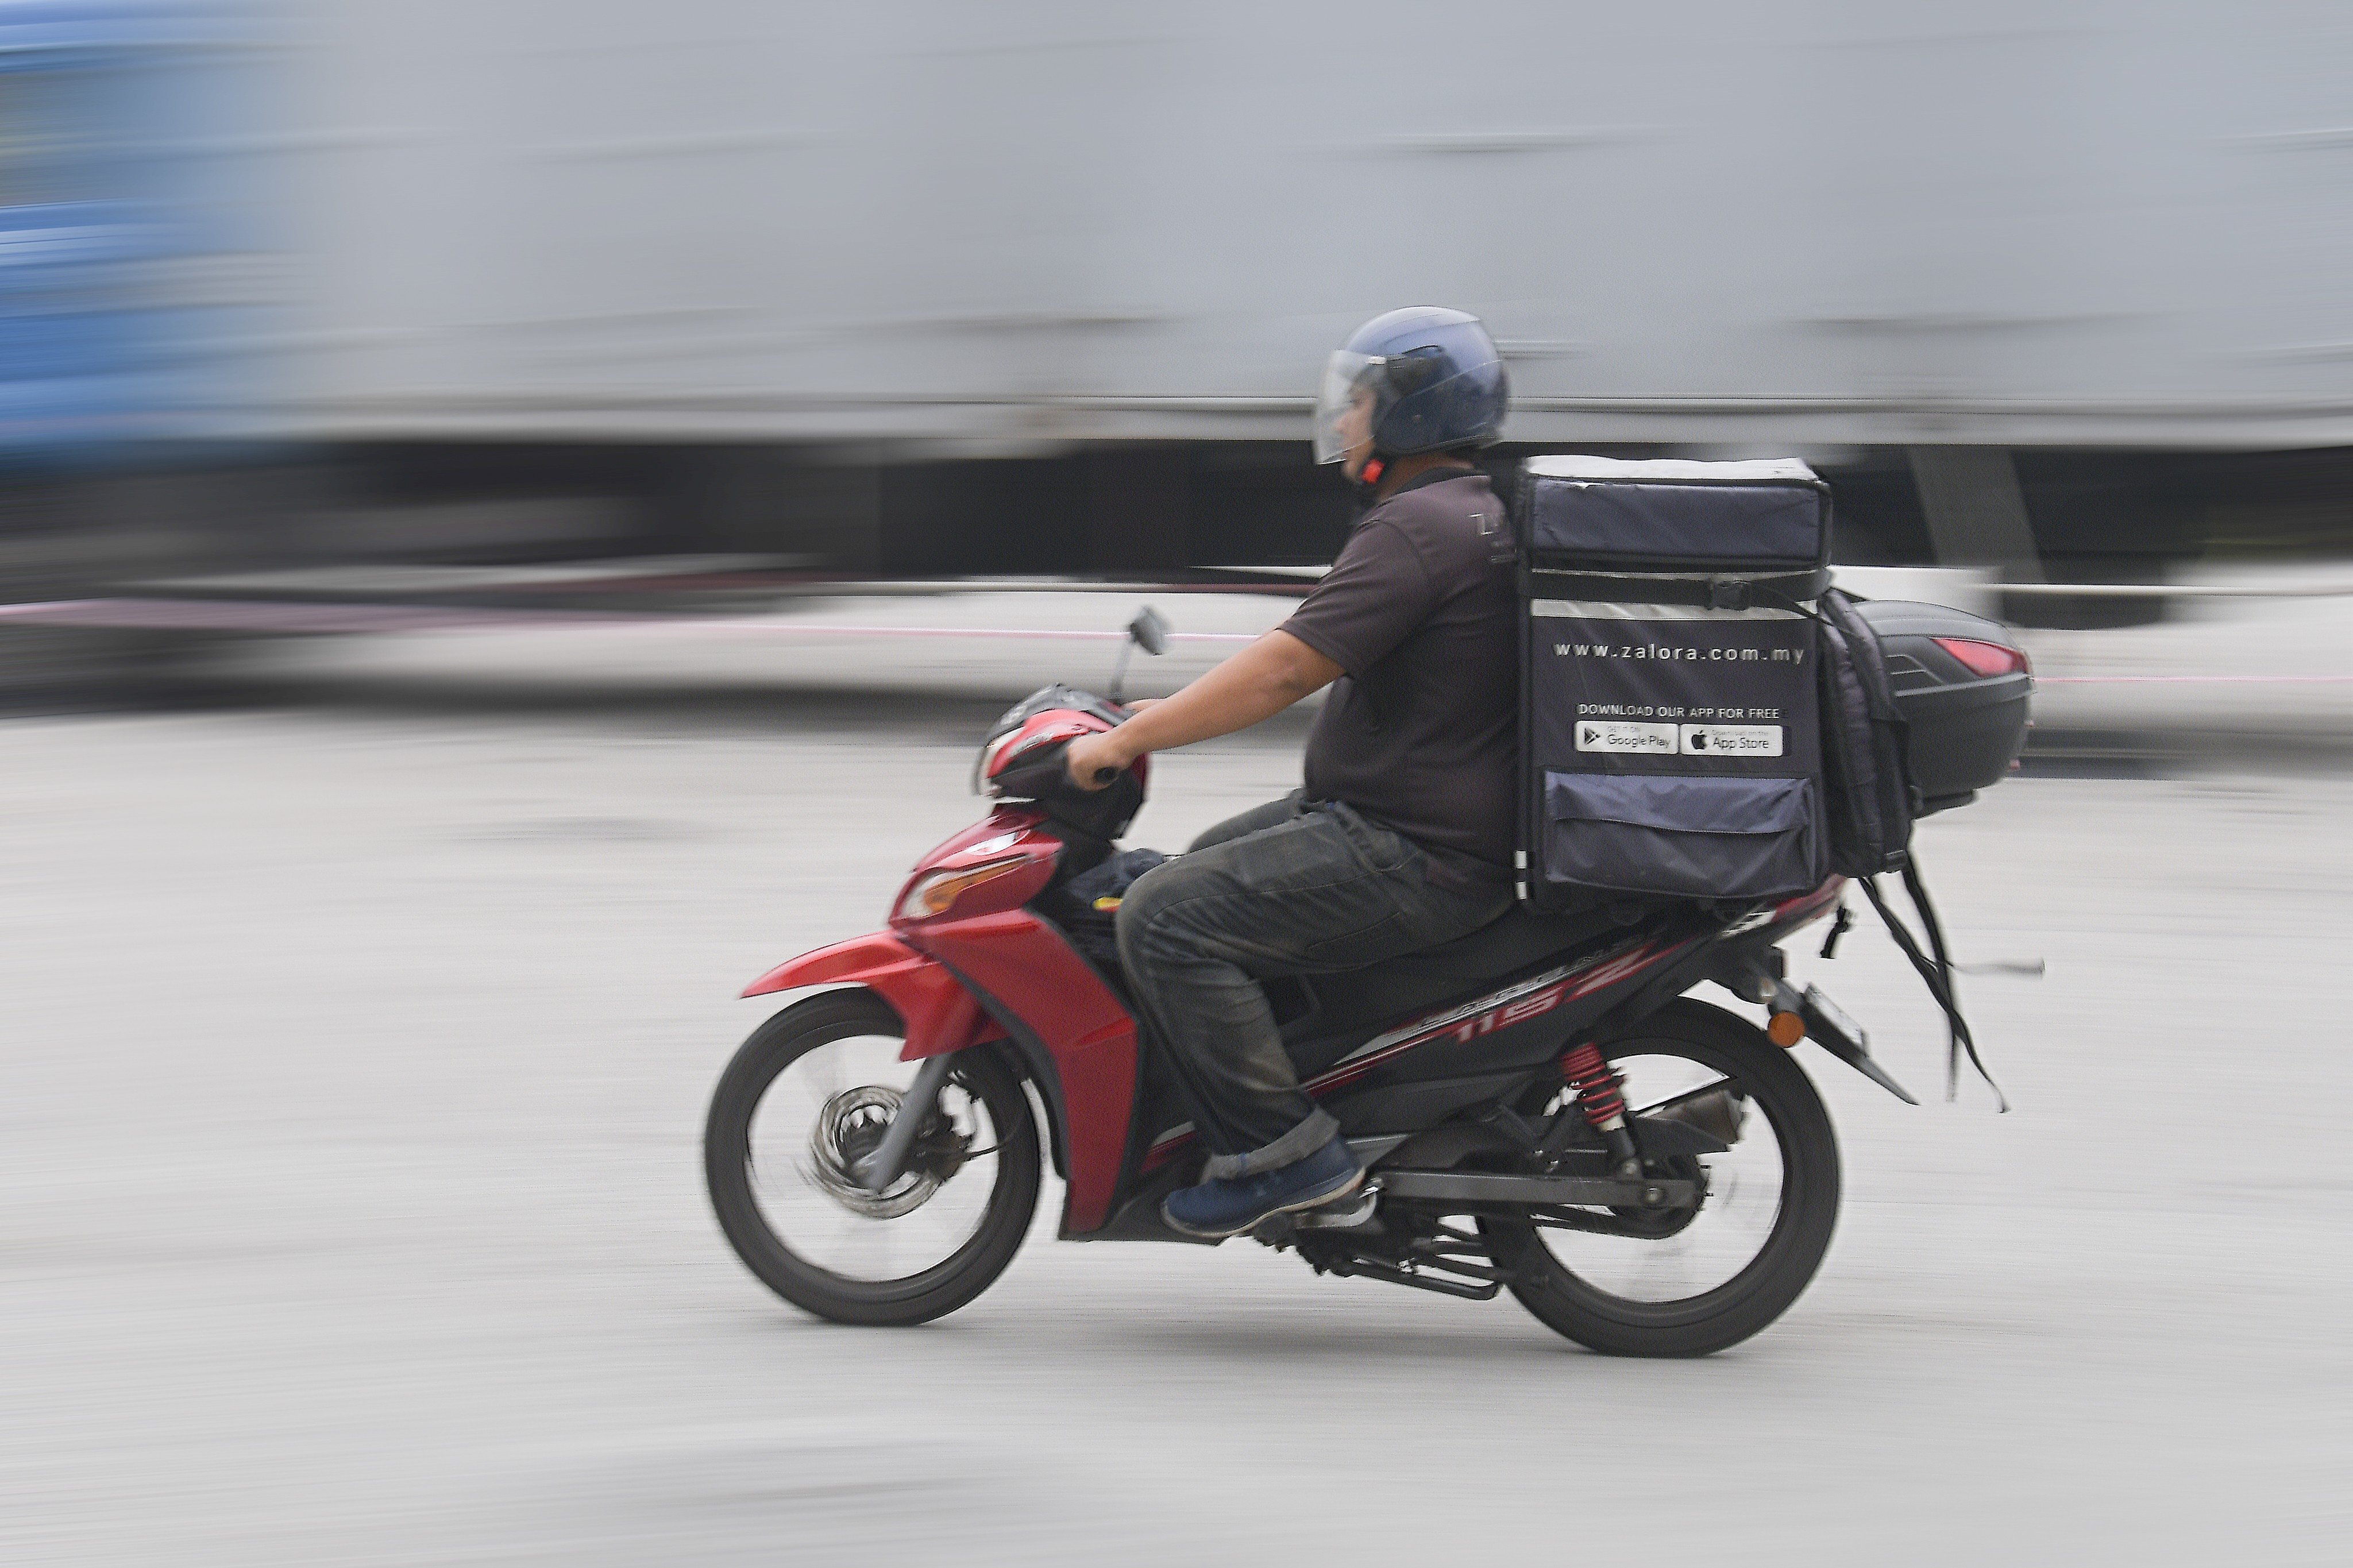 A Zalora courier rider rides his motorcycle in Kuala Lumpur. Photo: Zahim Mohd